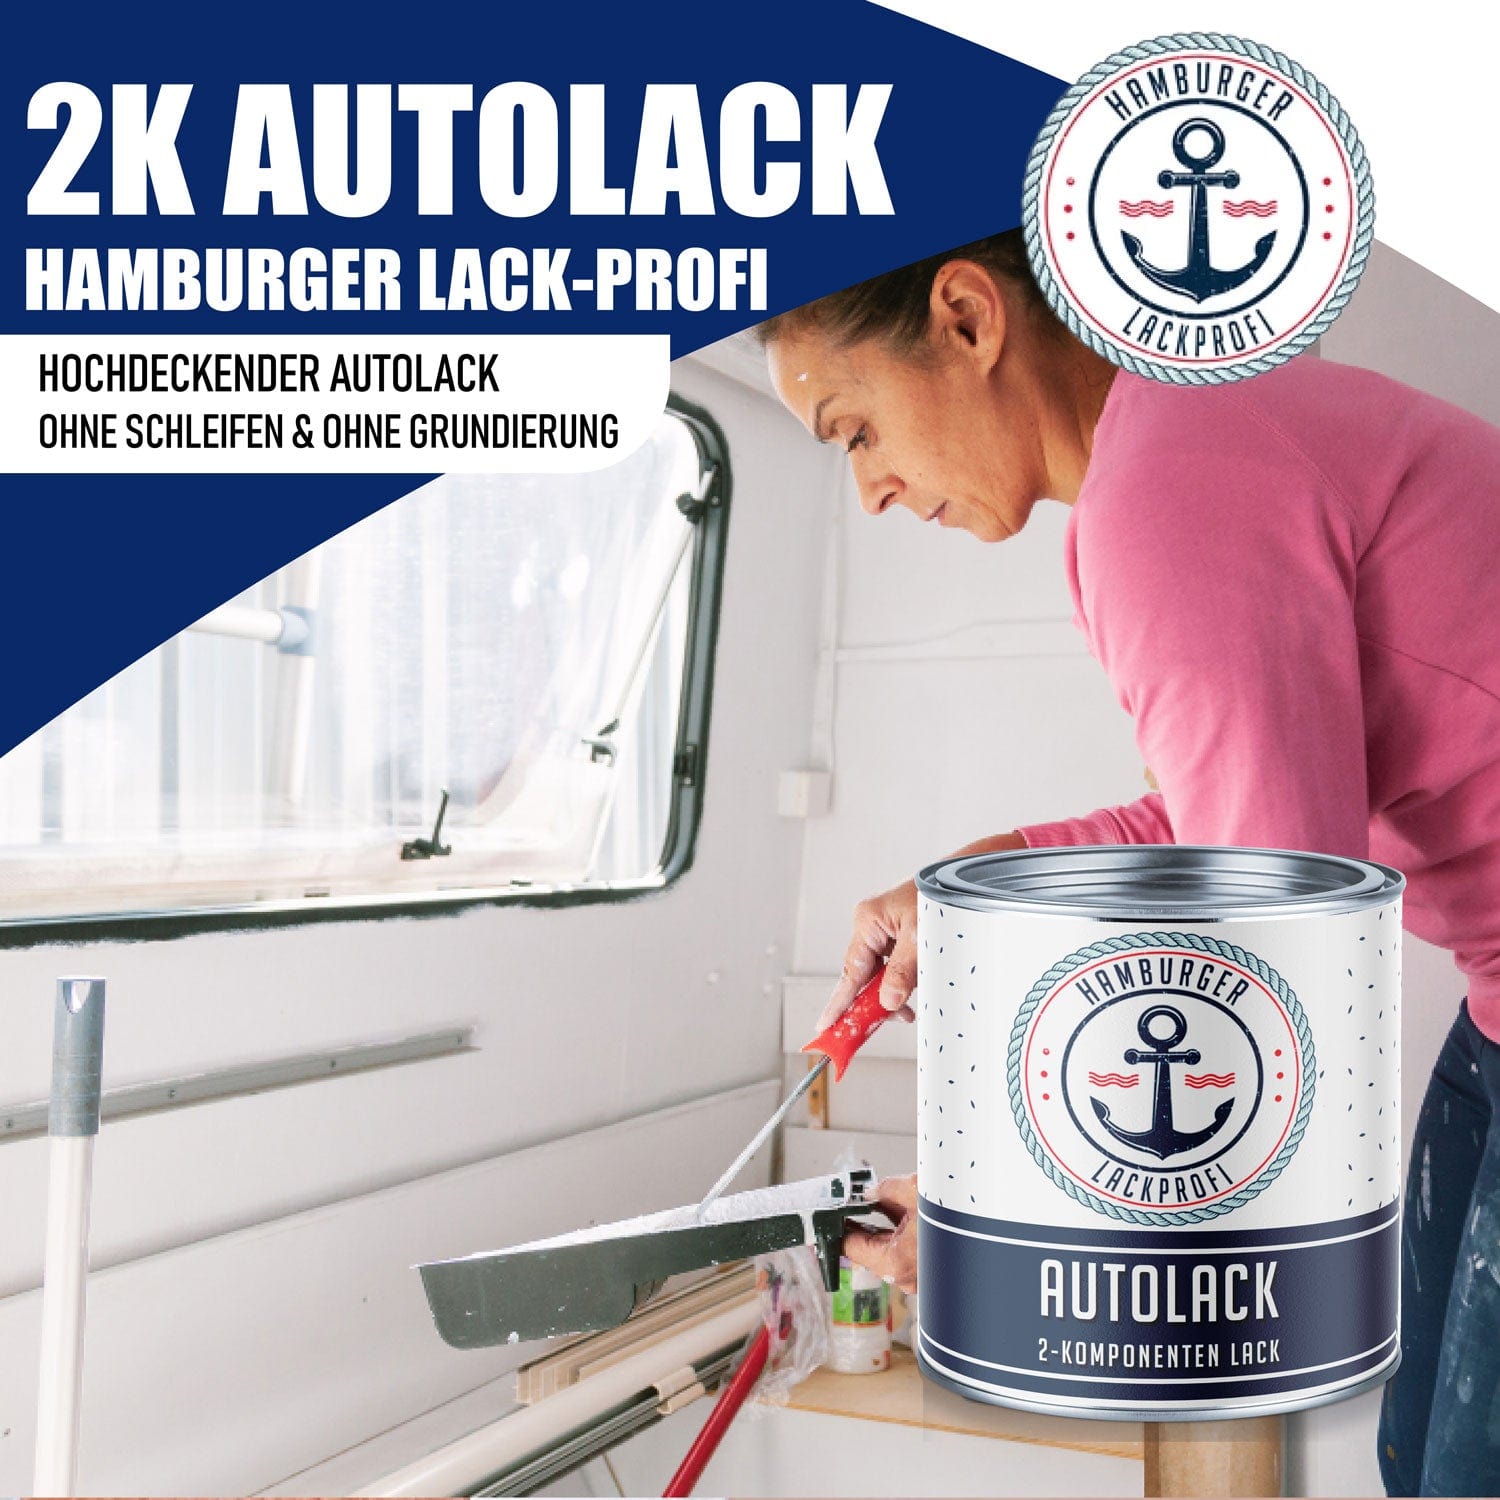 Hamburger Lack-Profi Lacke & Beschichtungen Hamburger Lack-Profi 2K Autolack in Capriblau RAL 5019 mit Lackierset (X300) & Verdünnung (1 L) - 30% Sparangebot